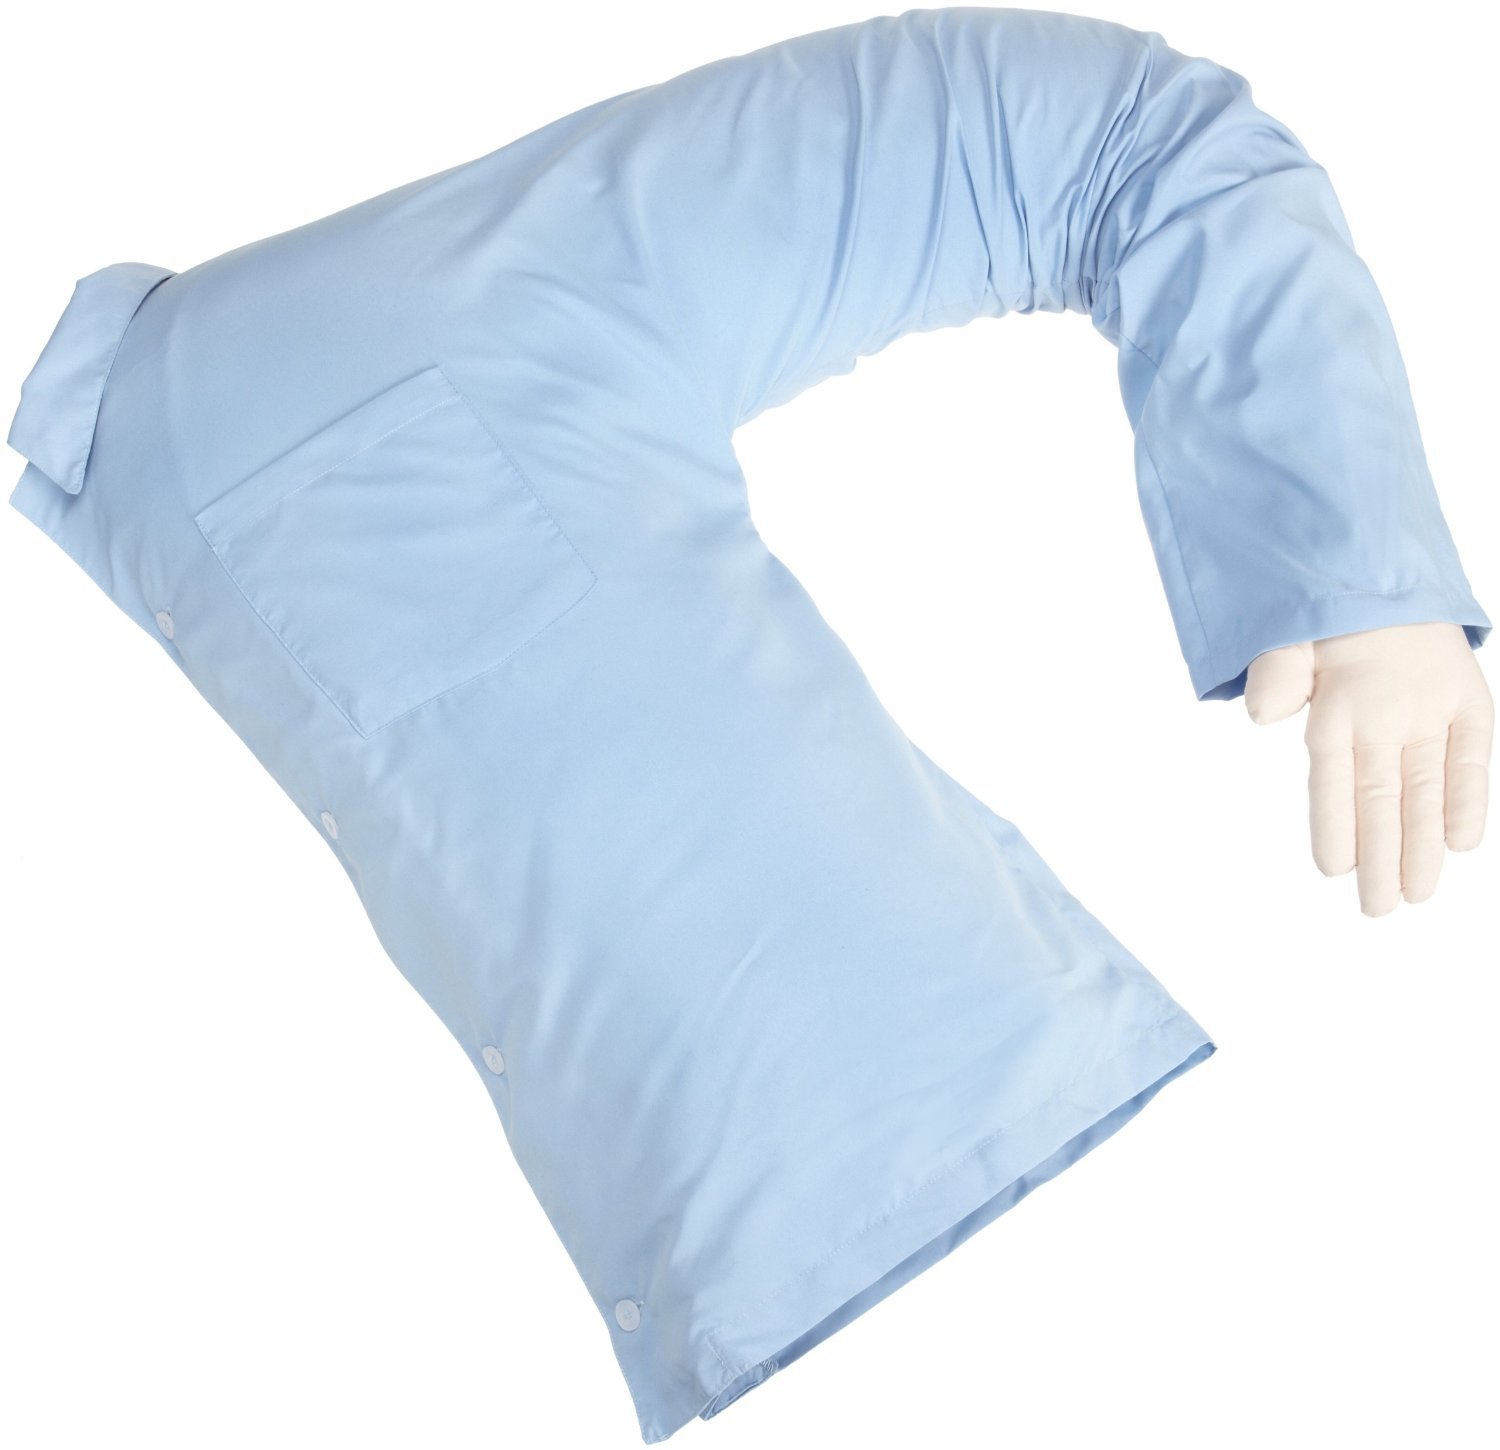 The Boyfriend Pillow